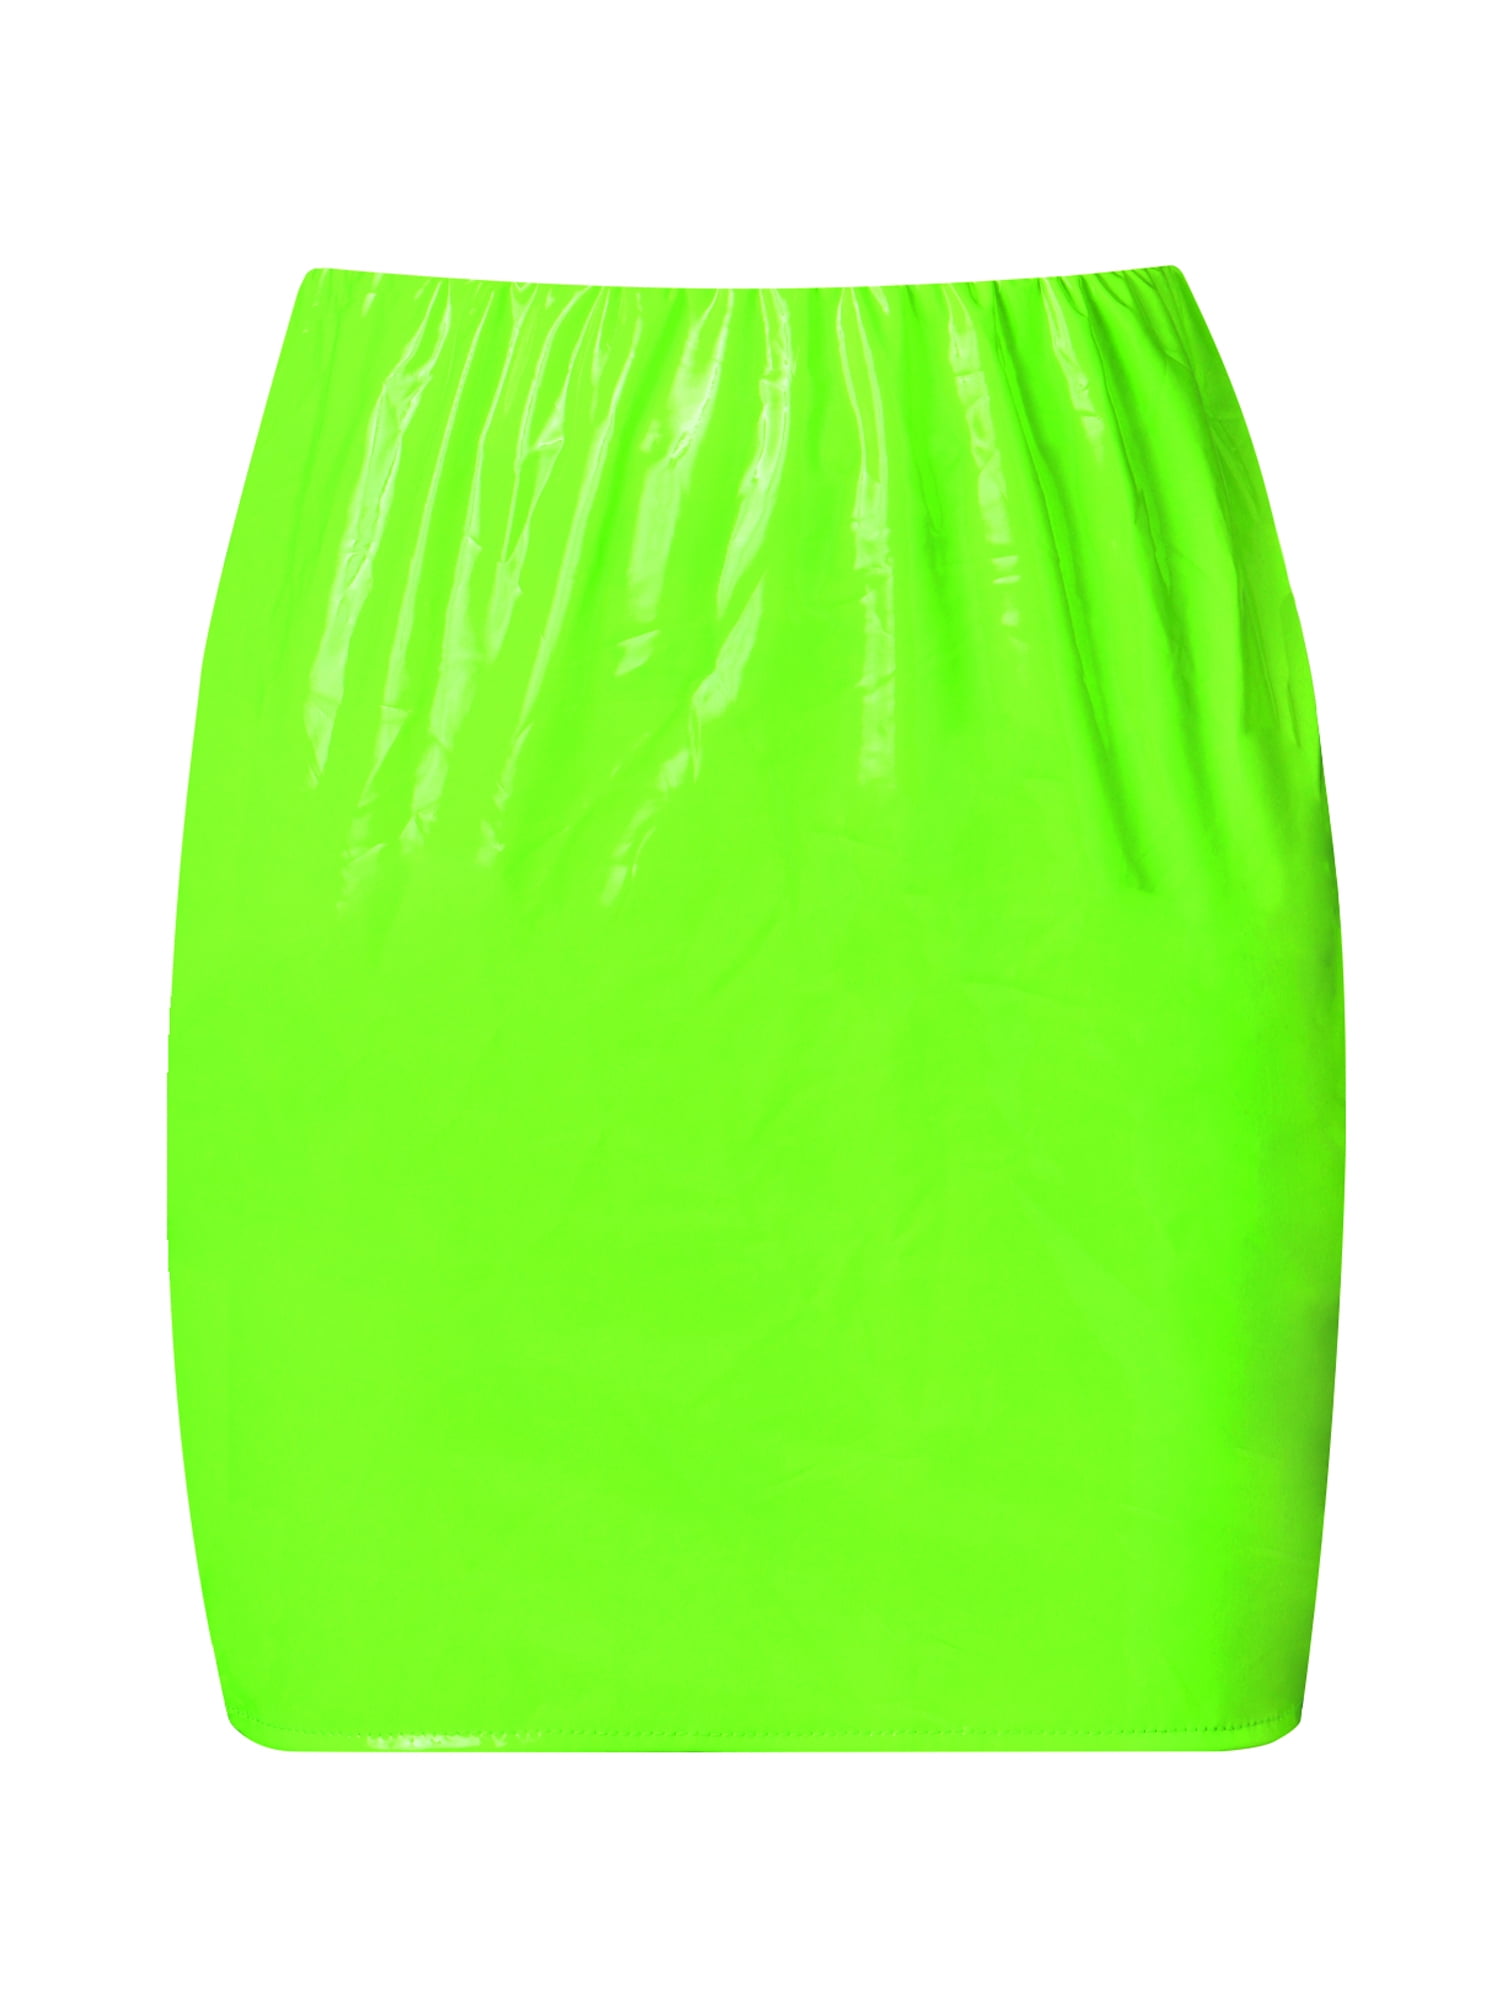 Sunisery Women Bodycon Mini Pencil Skirt Pu Leather High Waist Bright ...